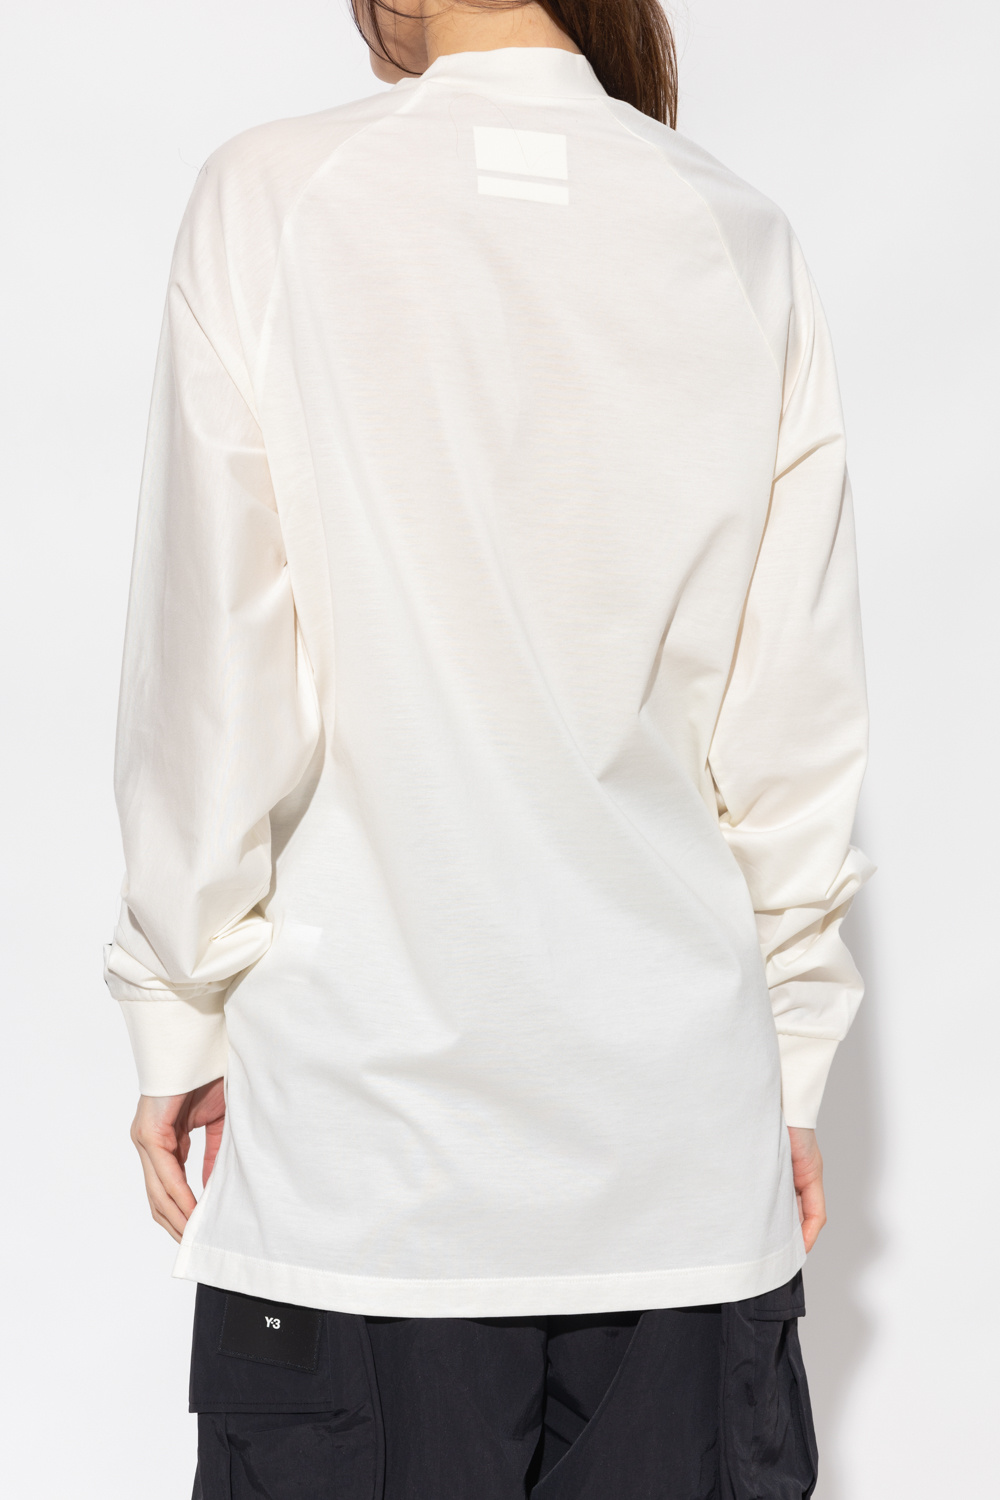 el hoodie de Stussy top T-shirt with detachable pocket